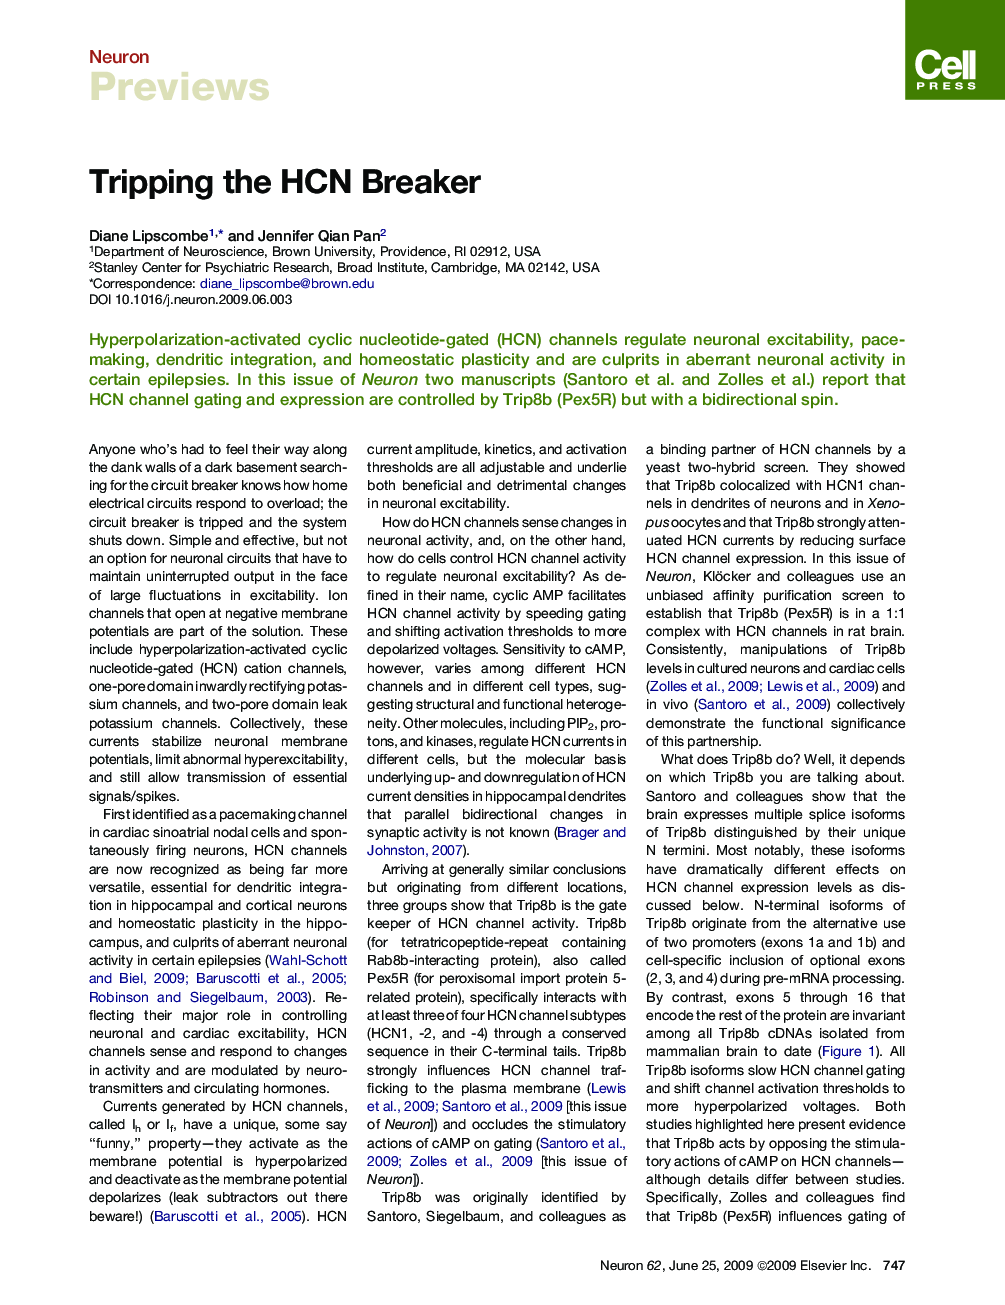 Tripping the HCN Breaker